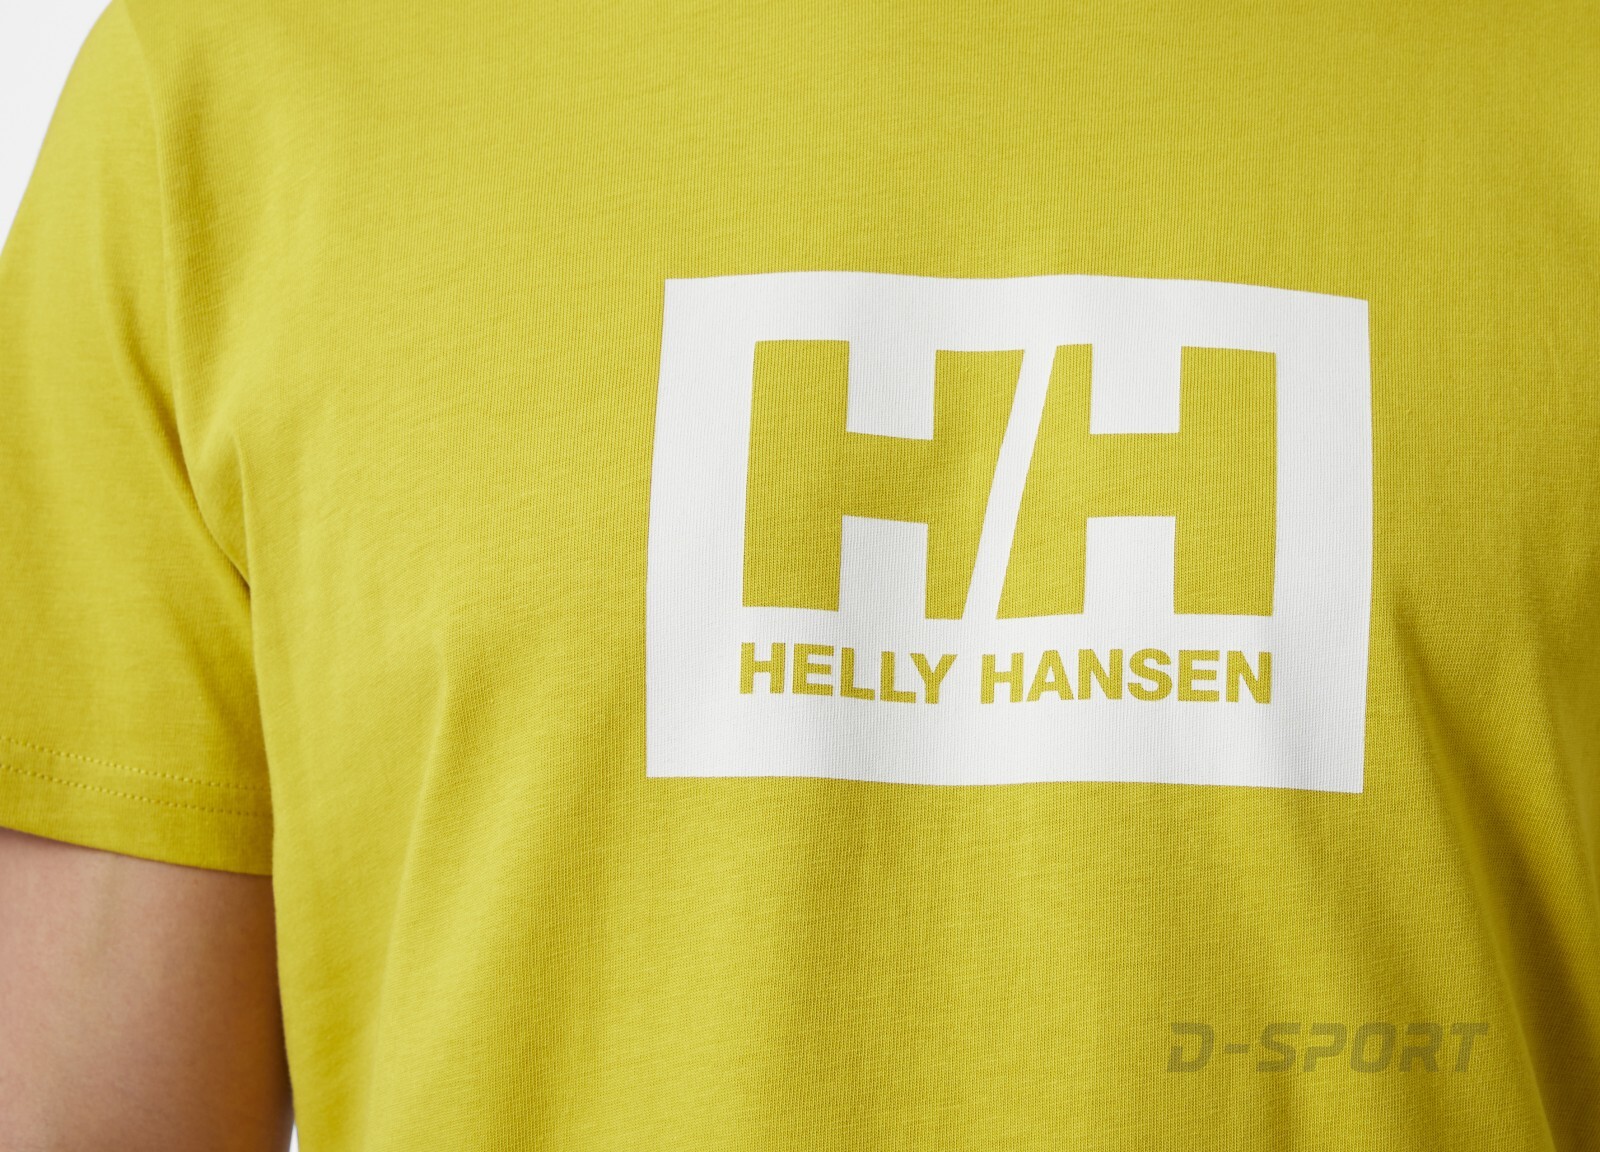 Helly Hansen Box T